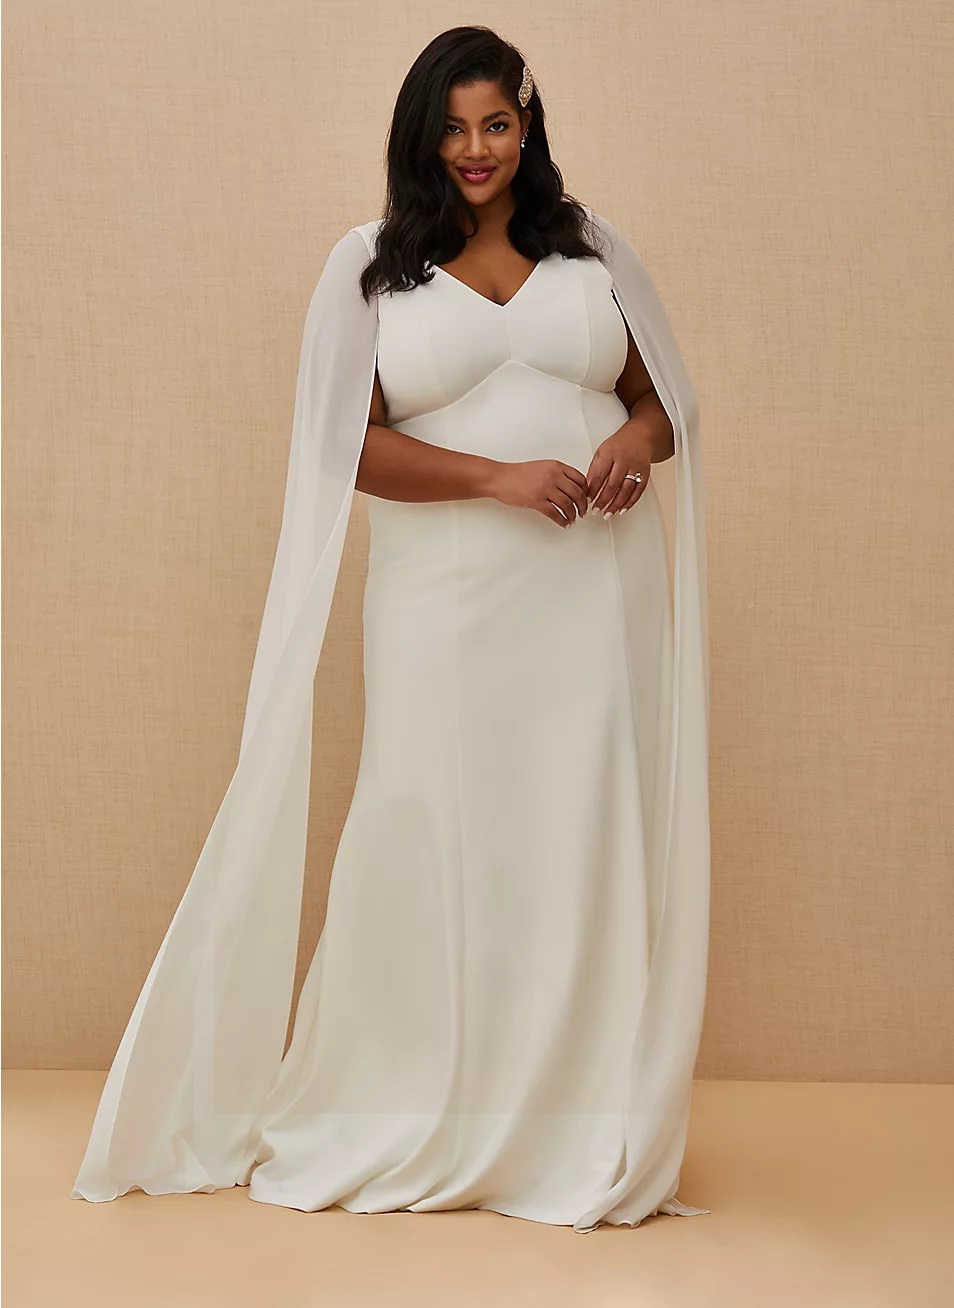 torrid wedding dress with white cape sleeves